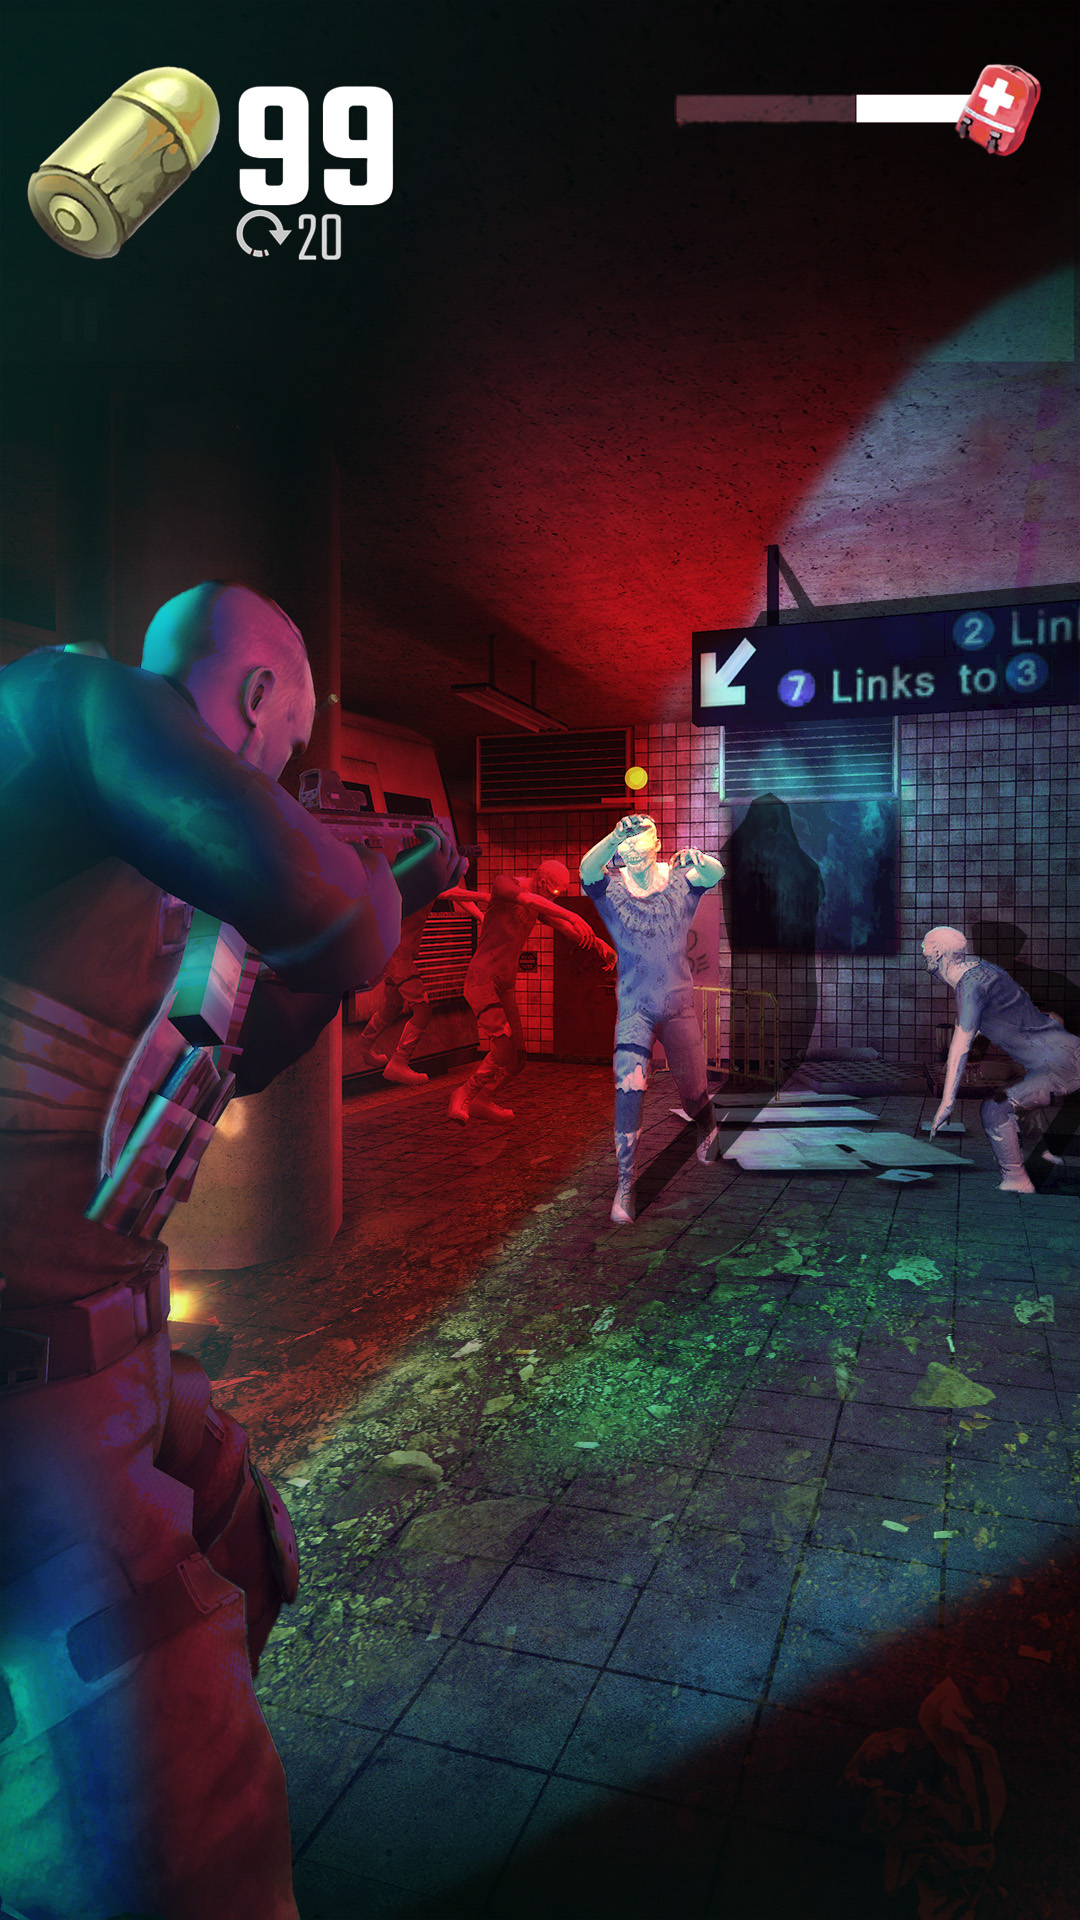 Download & Play Zombie.io : 3 Nights survivor on PC & Mac (Emulator)